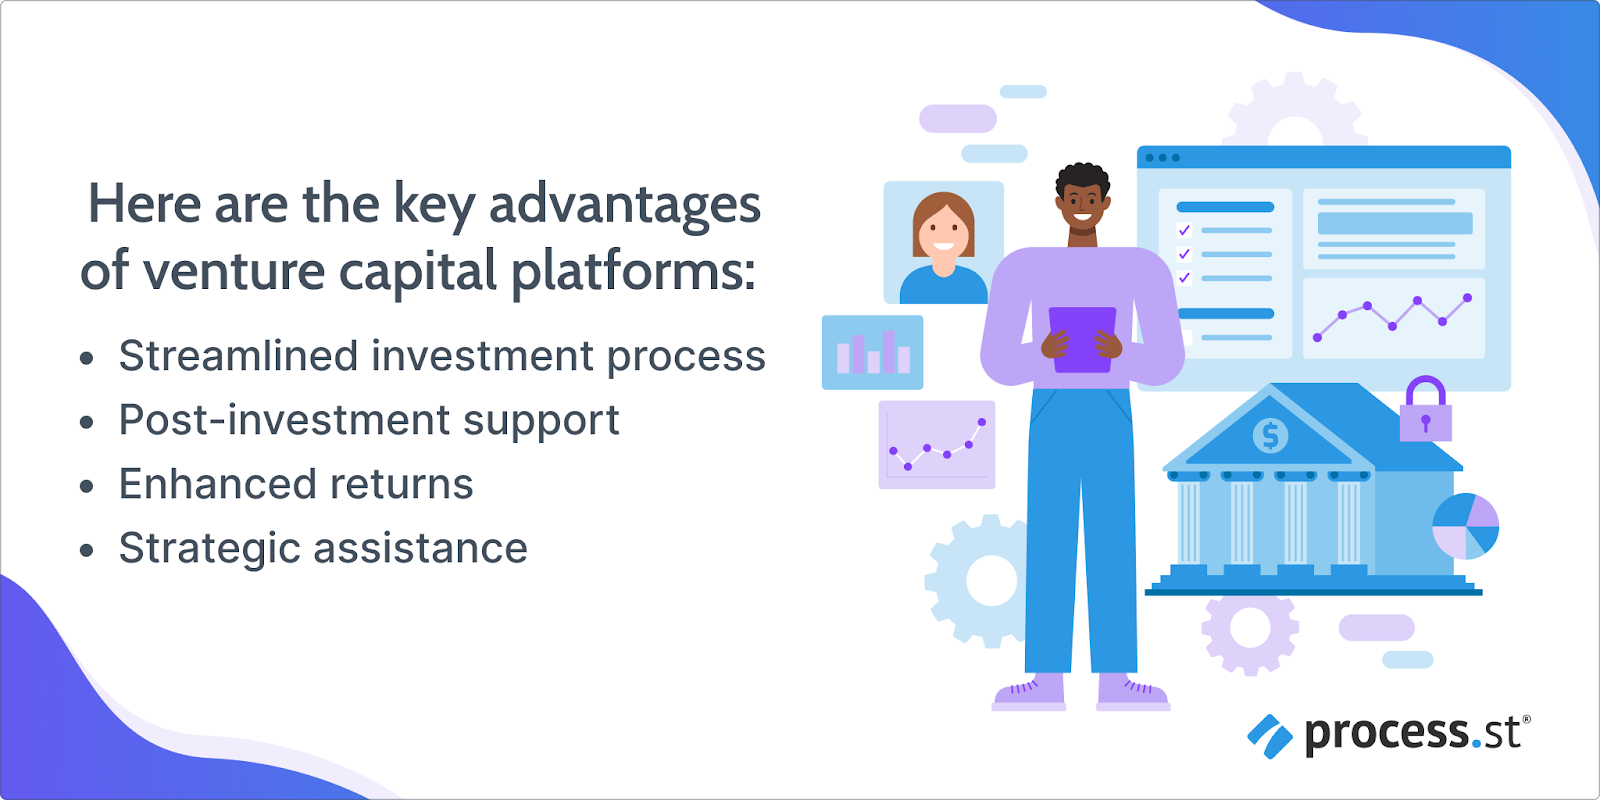 Image showing the key advantages of a venture capital platform